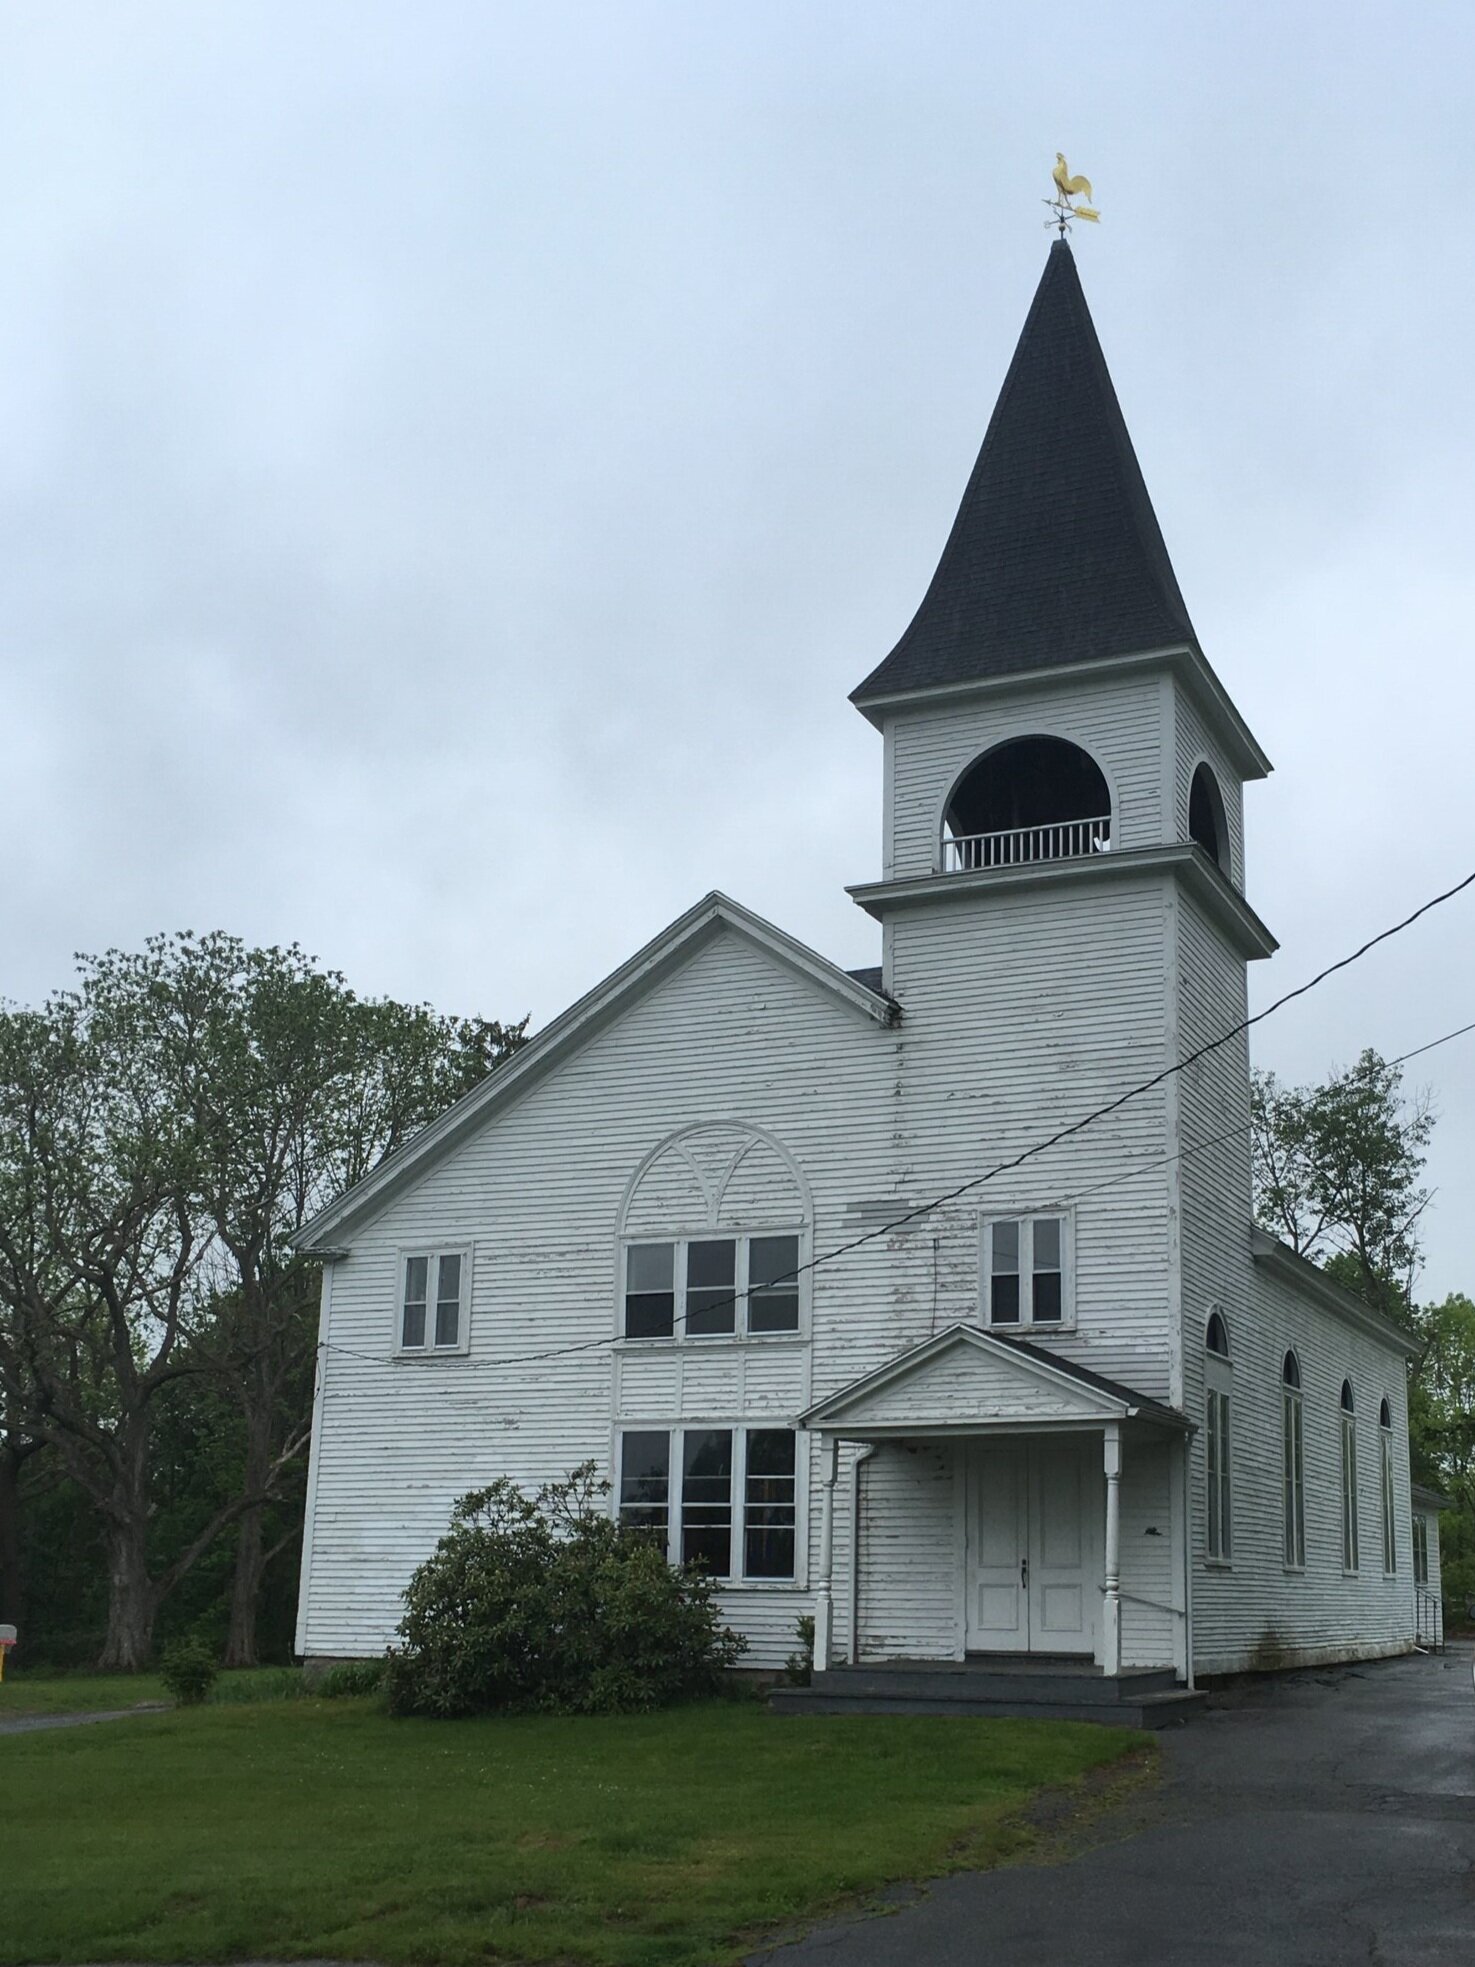 South Hampton Baptist Church